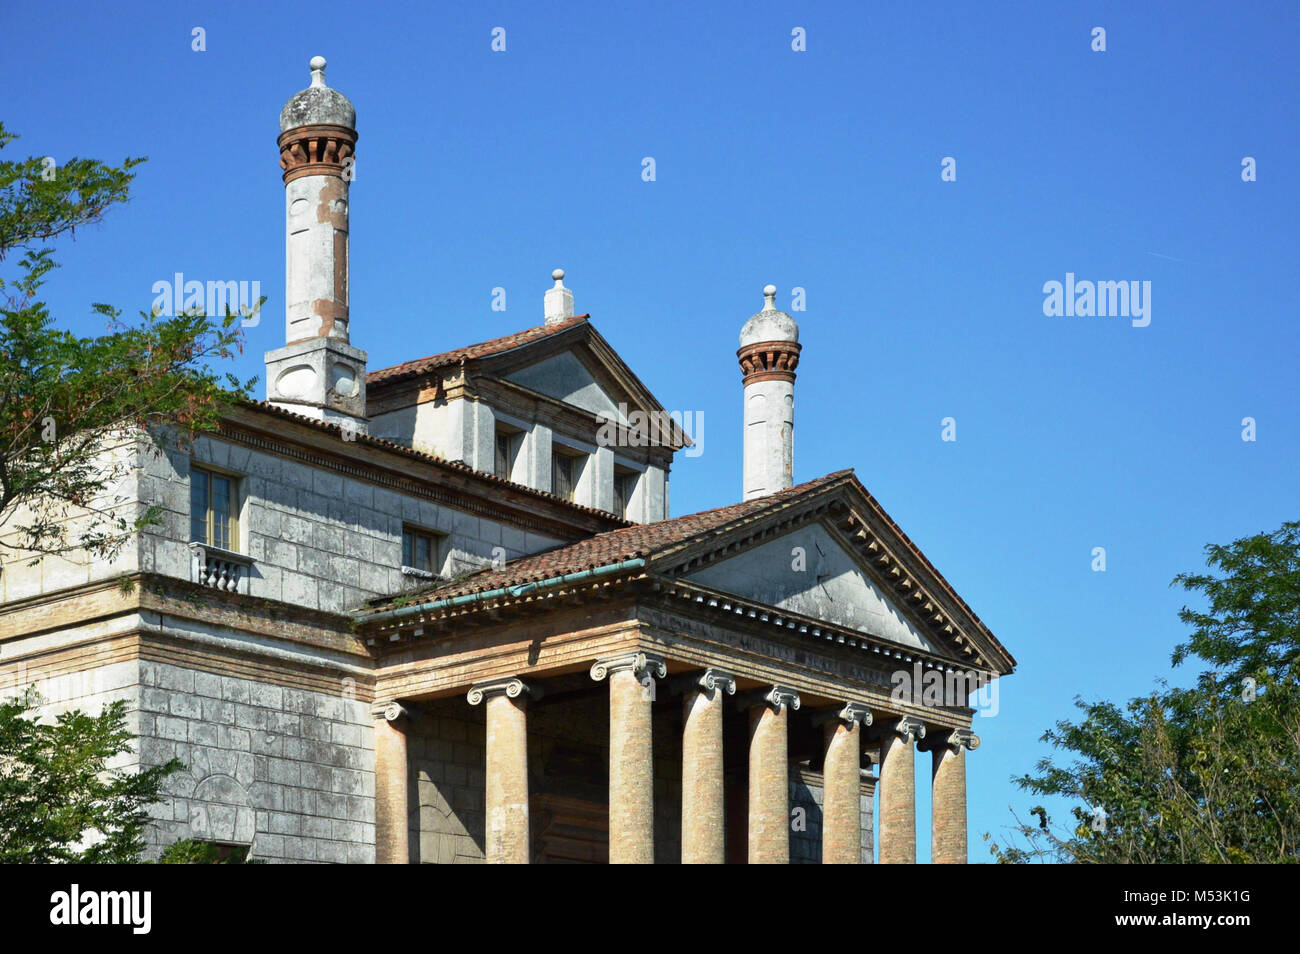 La Villa Foscari, nommé "La Malcontenta", l'architecte Andrea Palladio en 1559, Mira près de Venise en Italie Banque D'Images